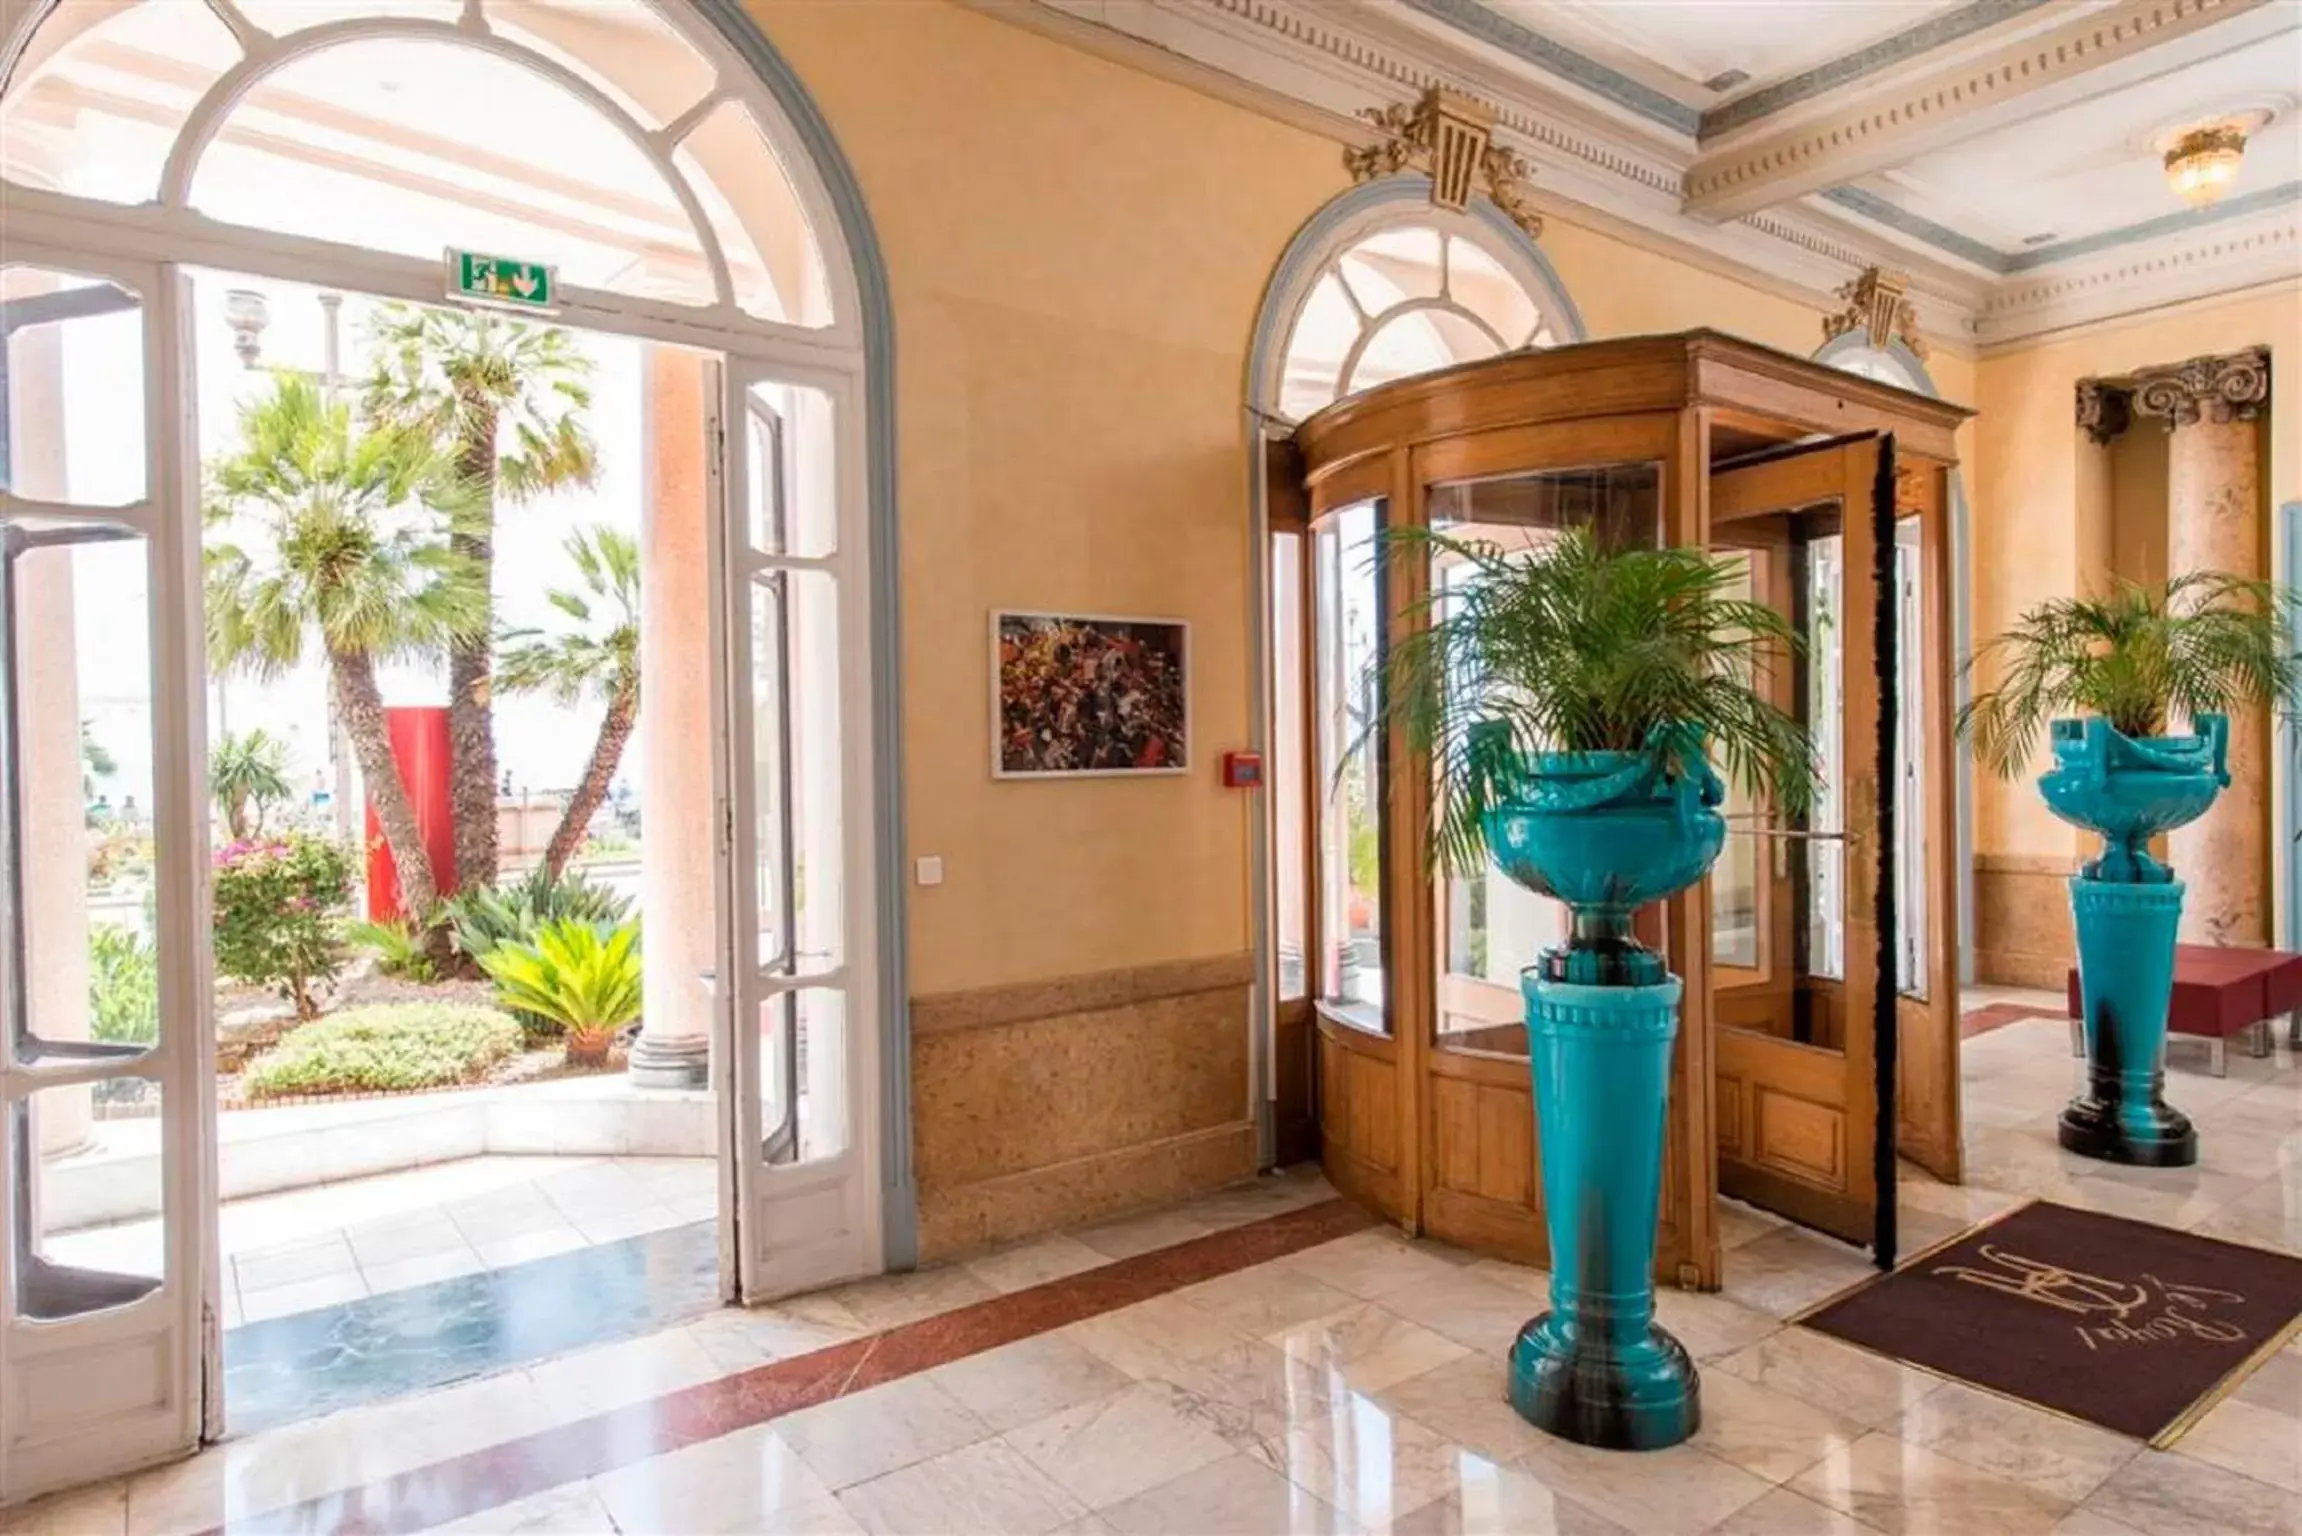 Lobby or reception in Hôtel Le Royal Promenade des Anglais